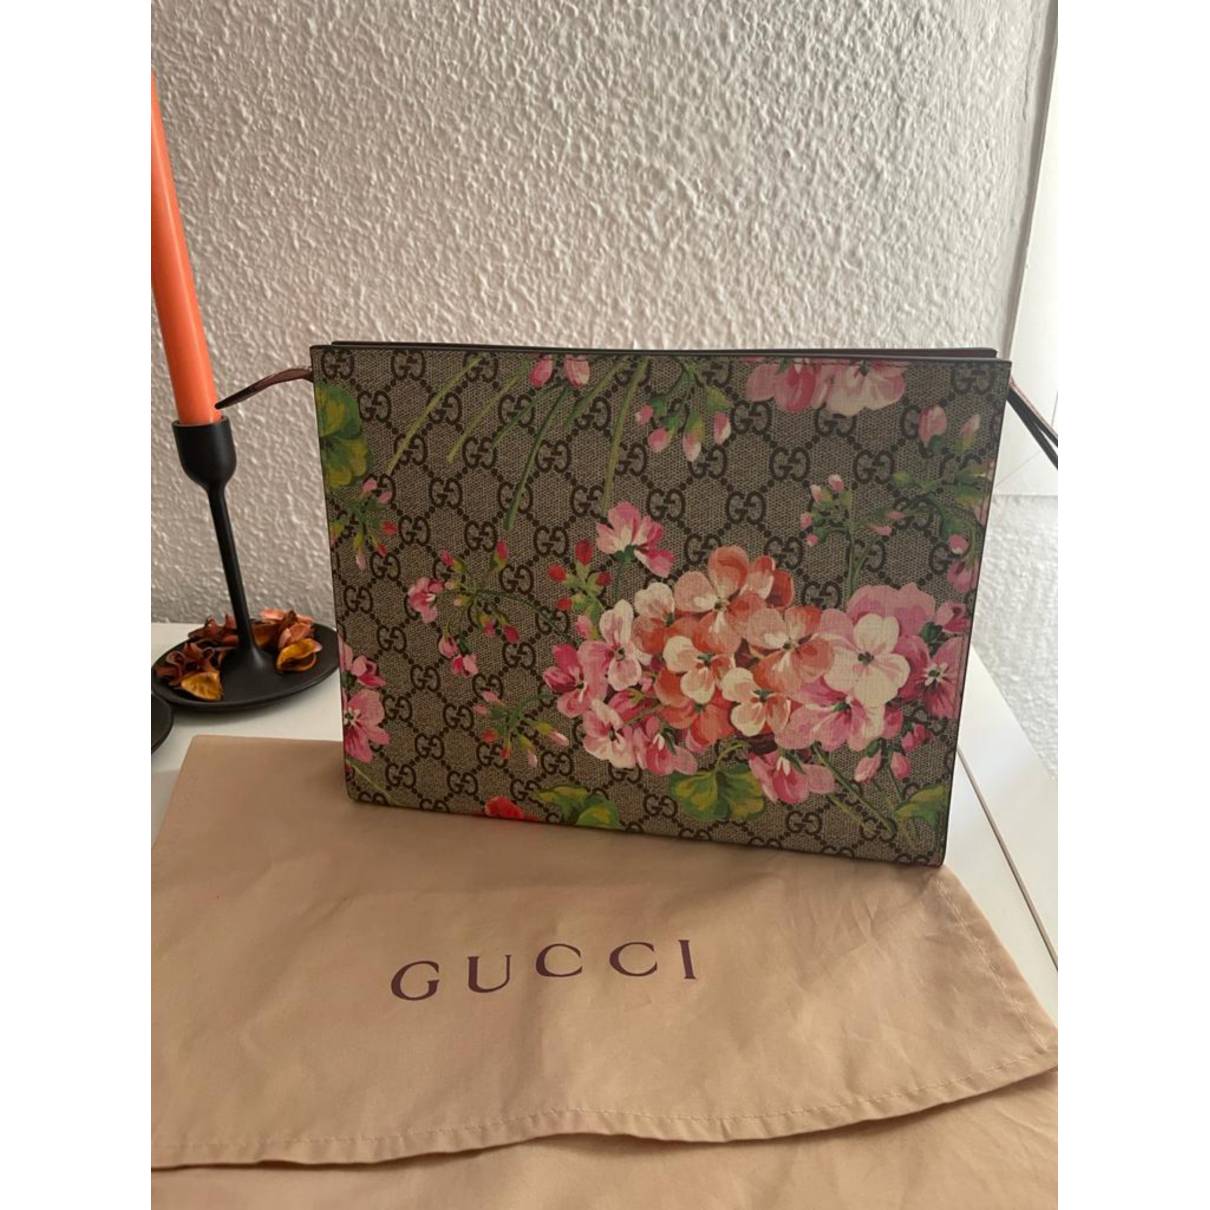 gucci bloom clutch bag